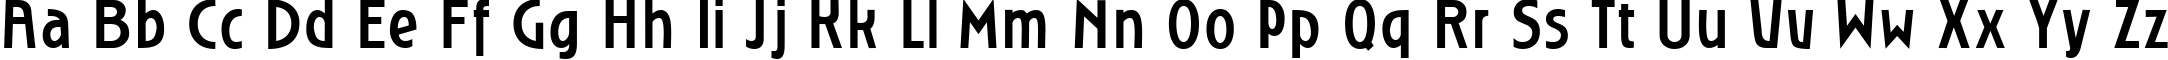 Пример написания английского алфавита шрифтом DG_RoslynGothic